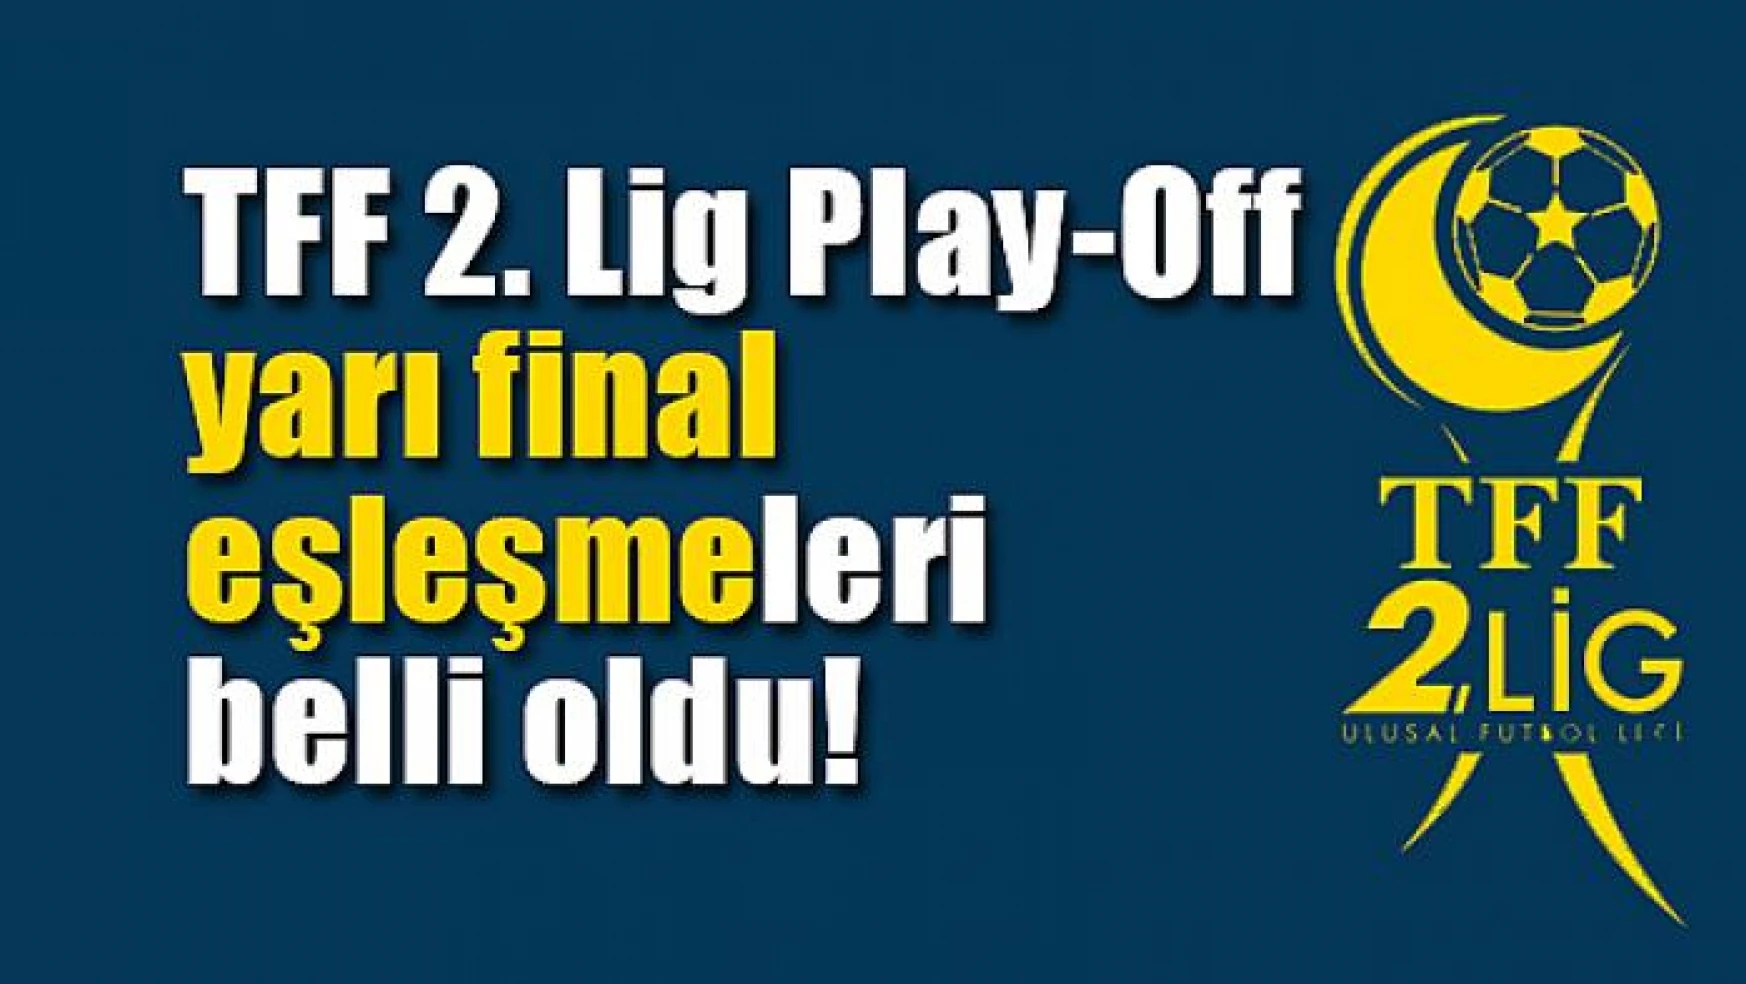 TFF 2. Lig Play-Off yarı final eşleşmeleri belli oldu